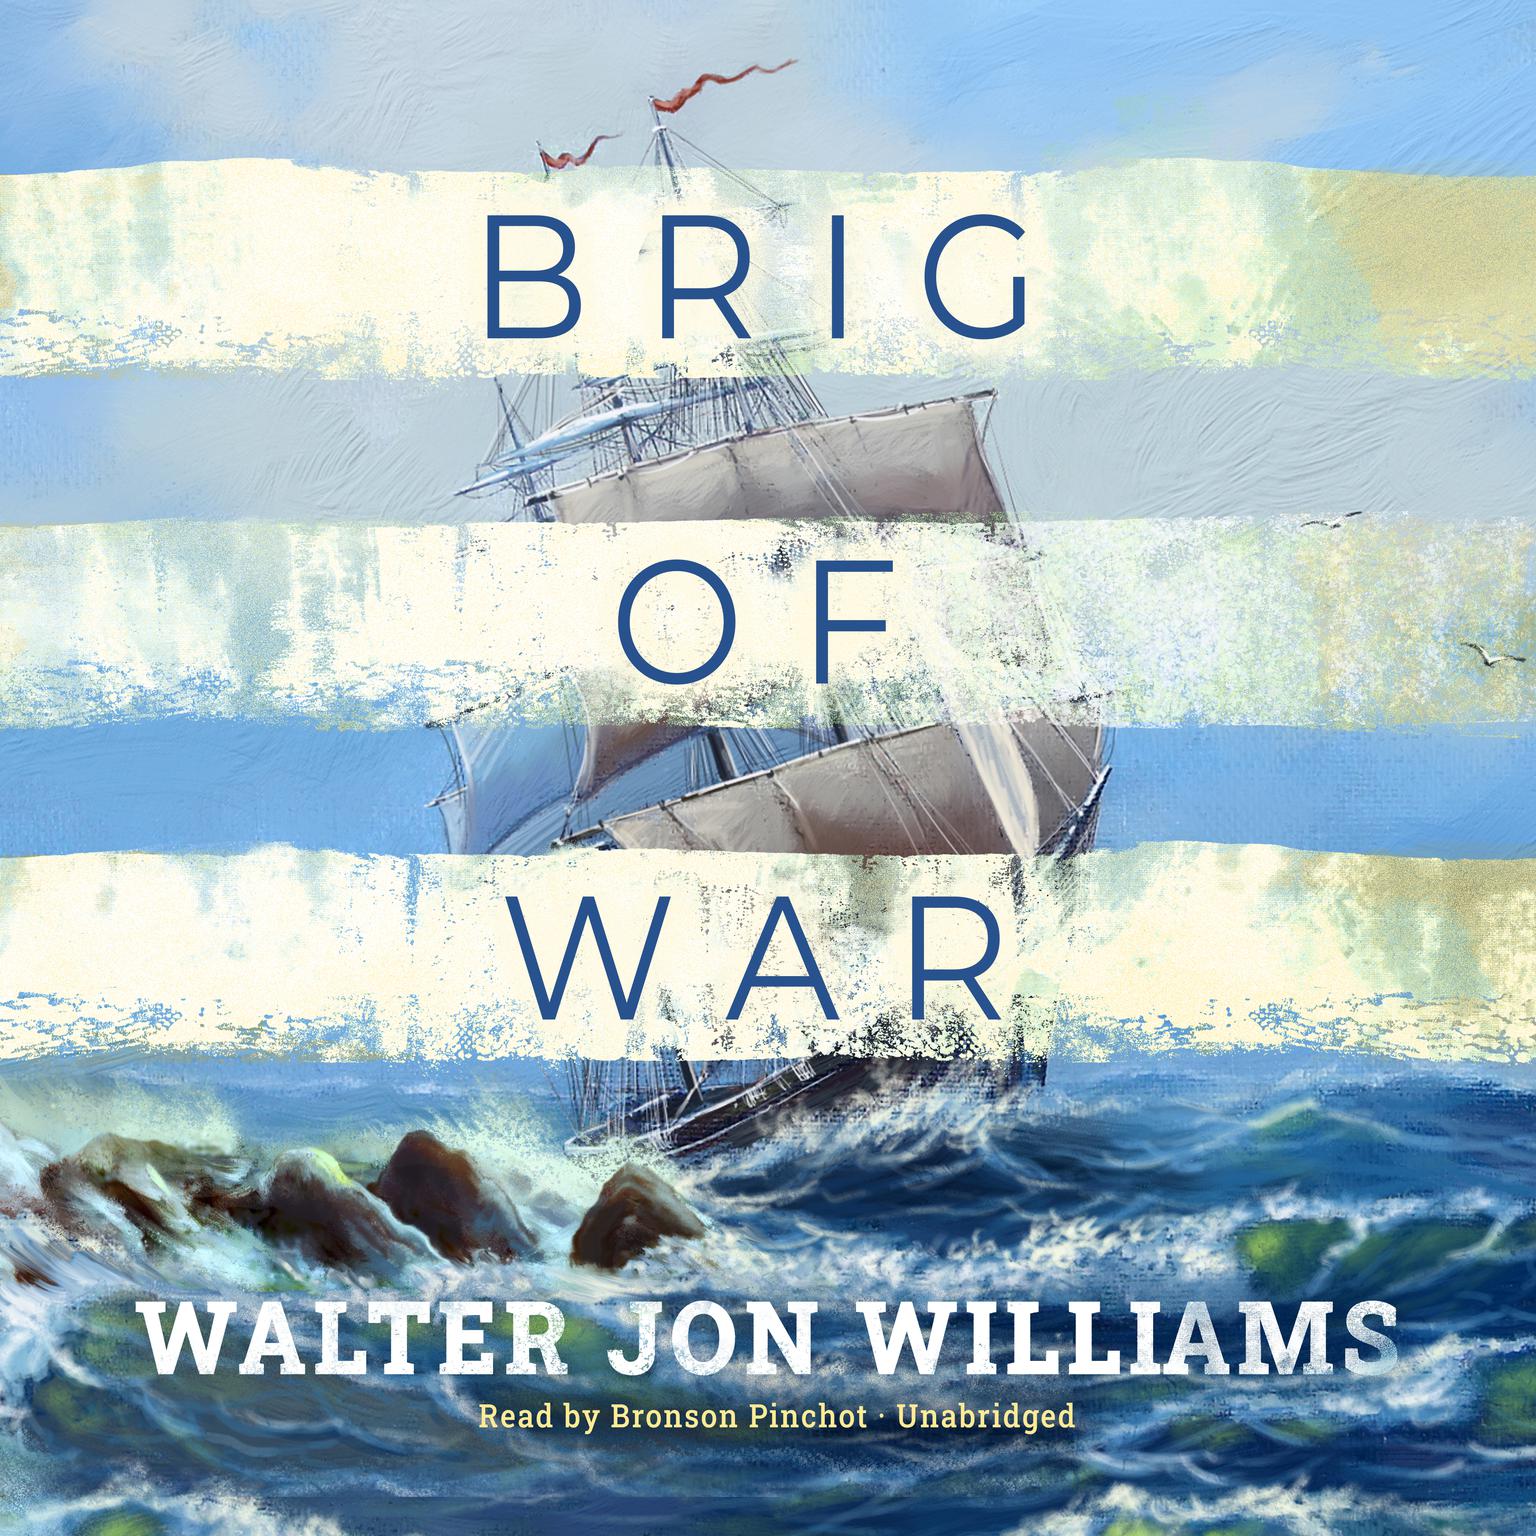 Brig of War Audiobook, by Walter Jon Williams